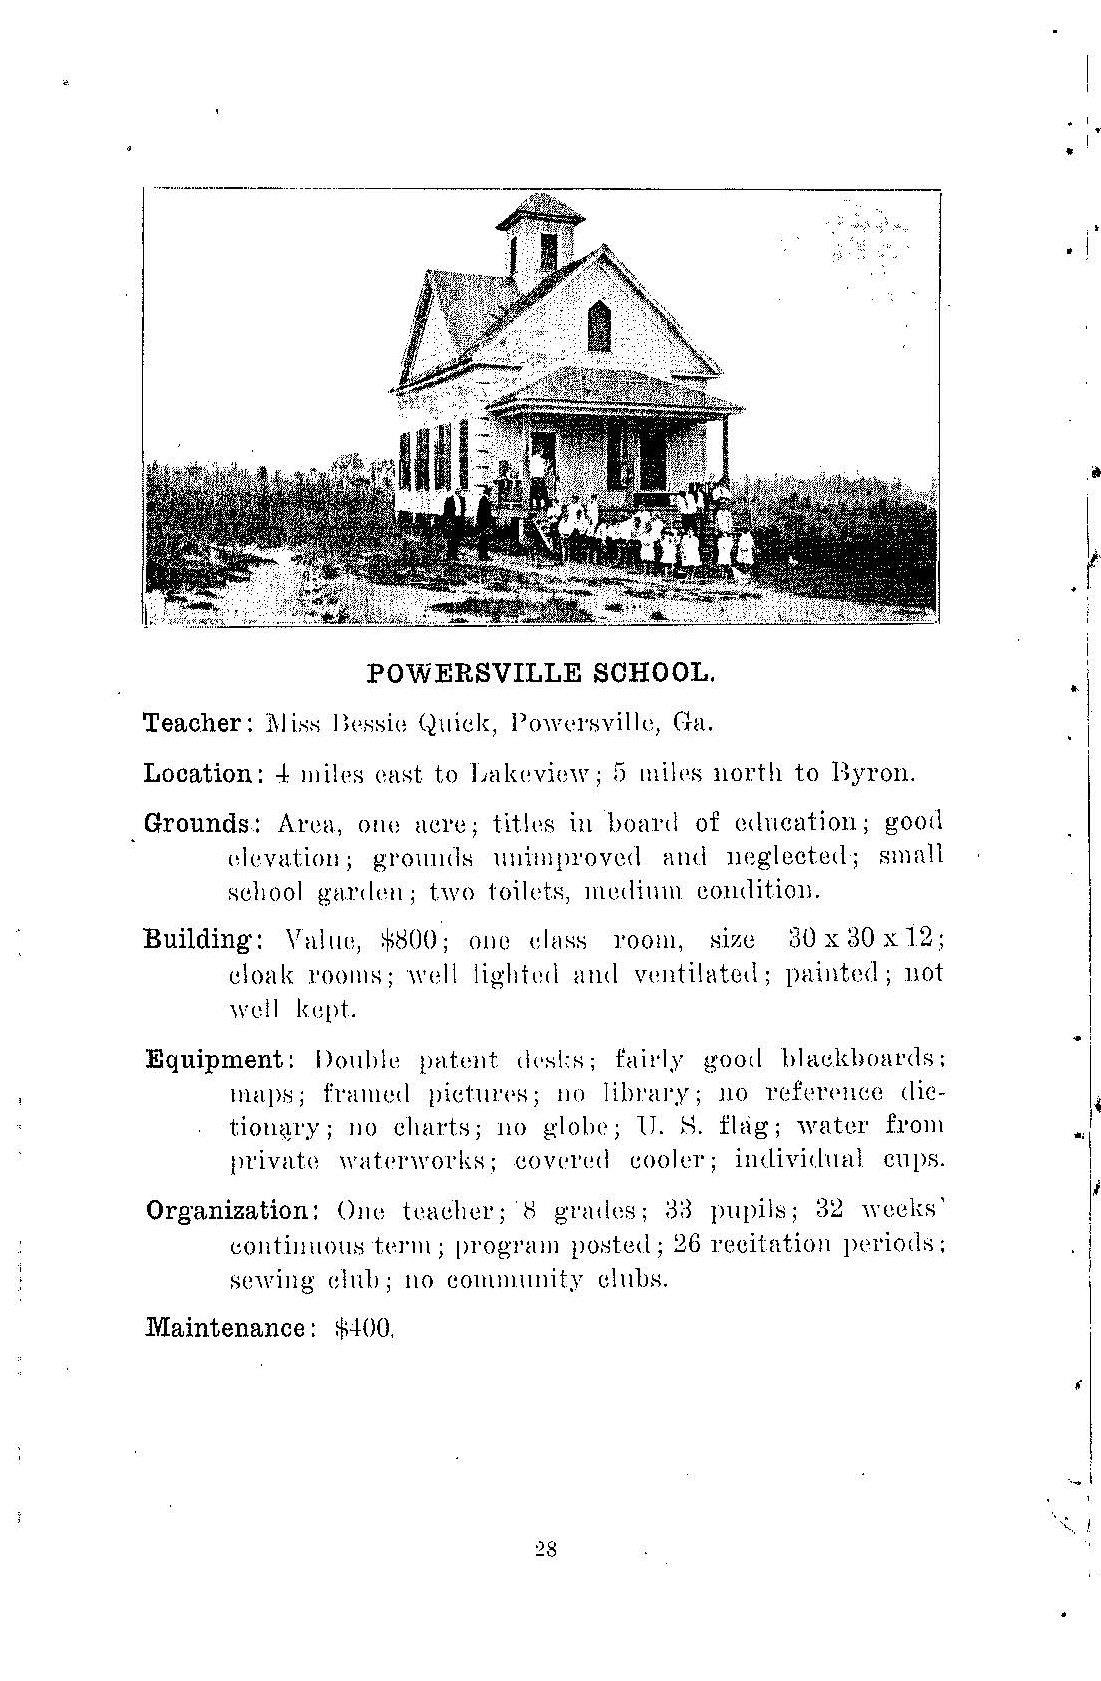 Powersville School